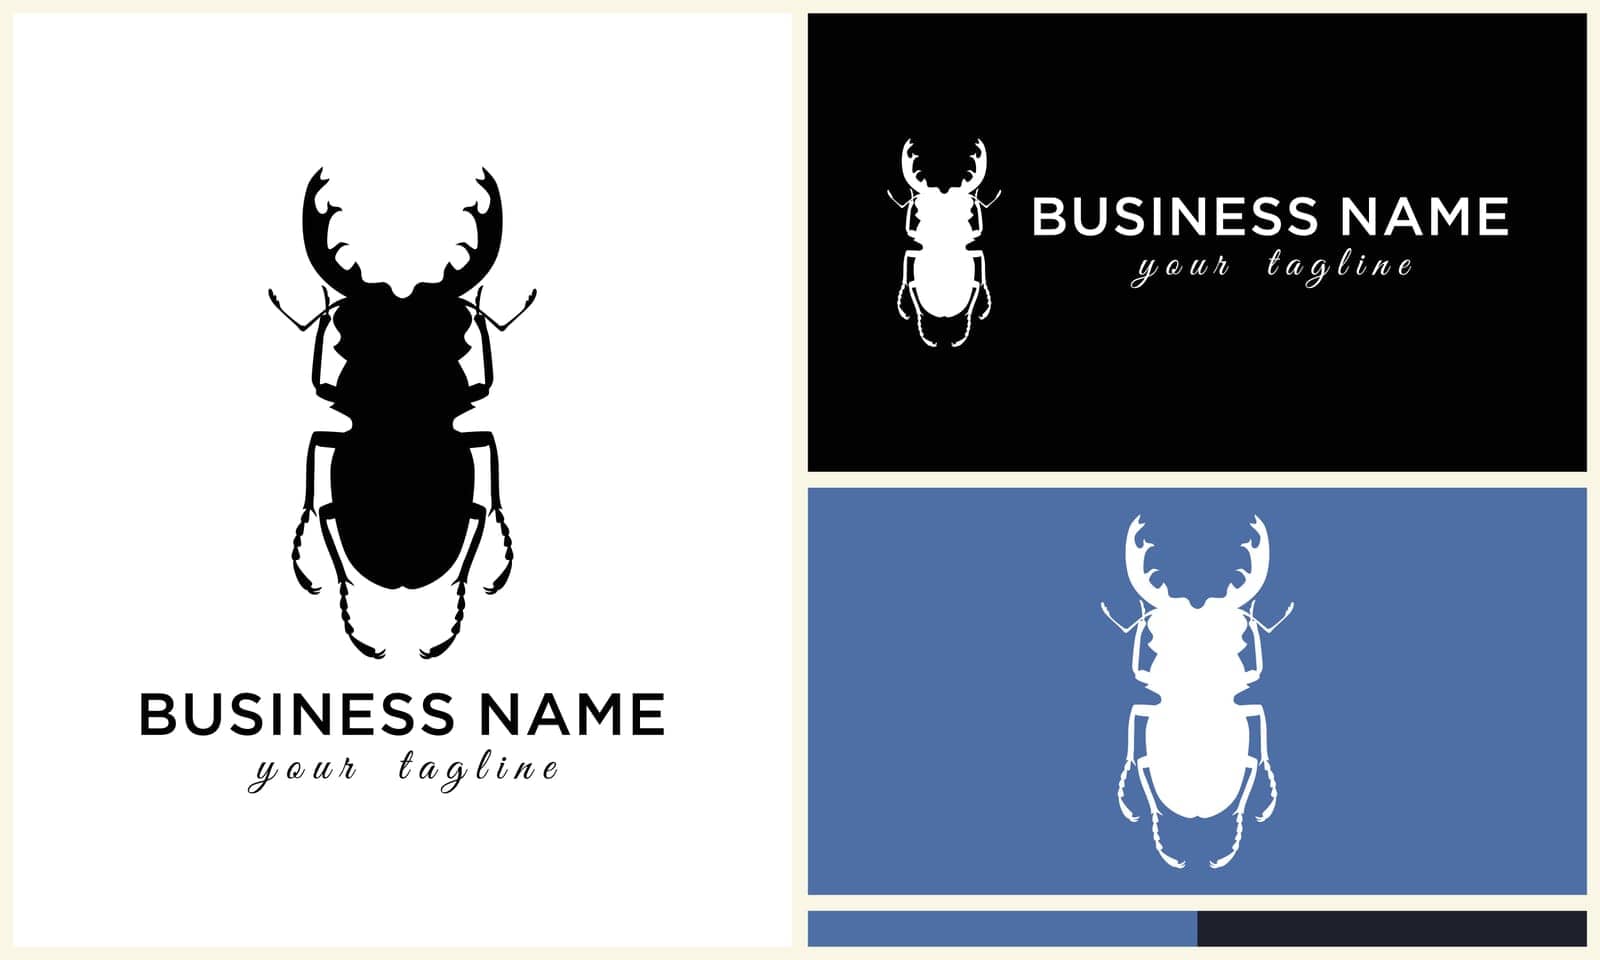 silhouette ladybug beetles logo template